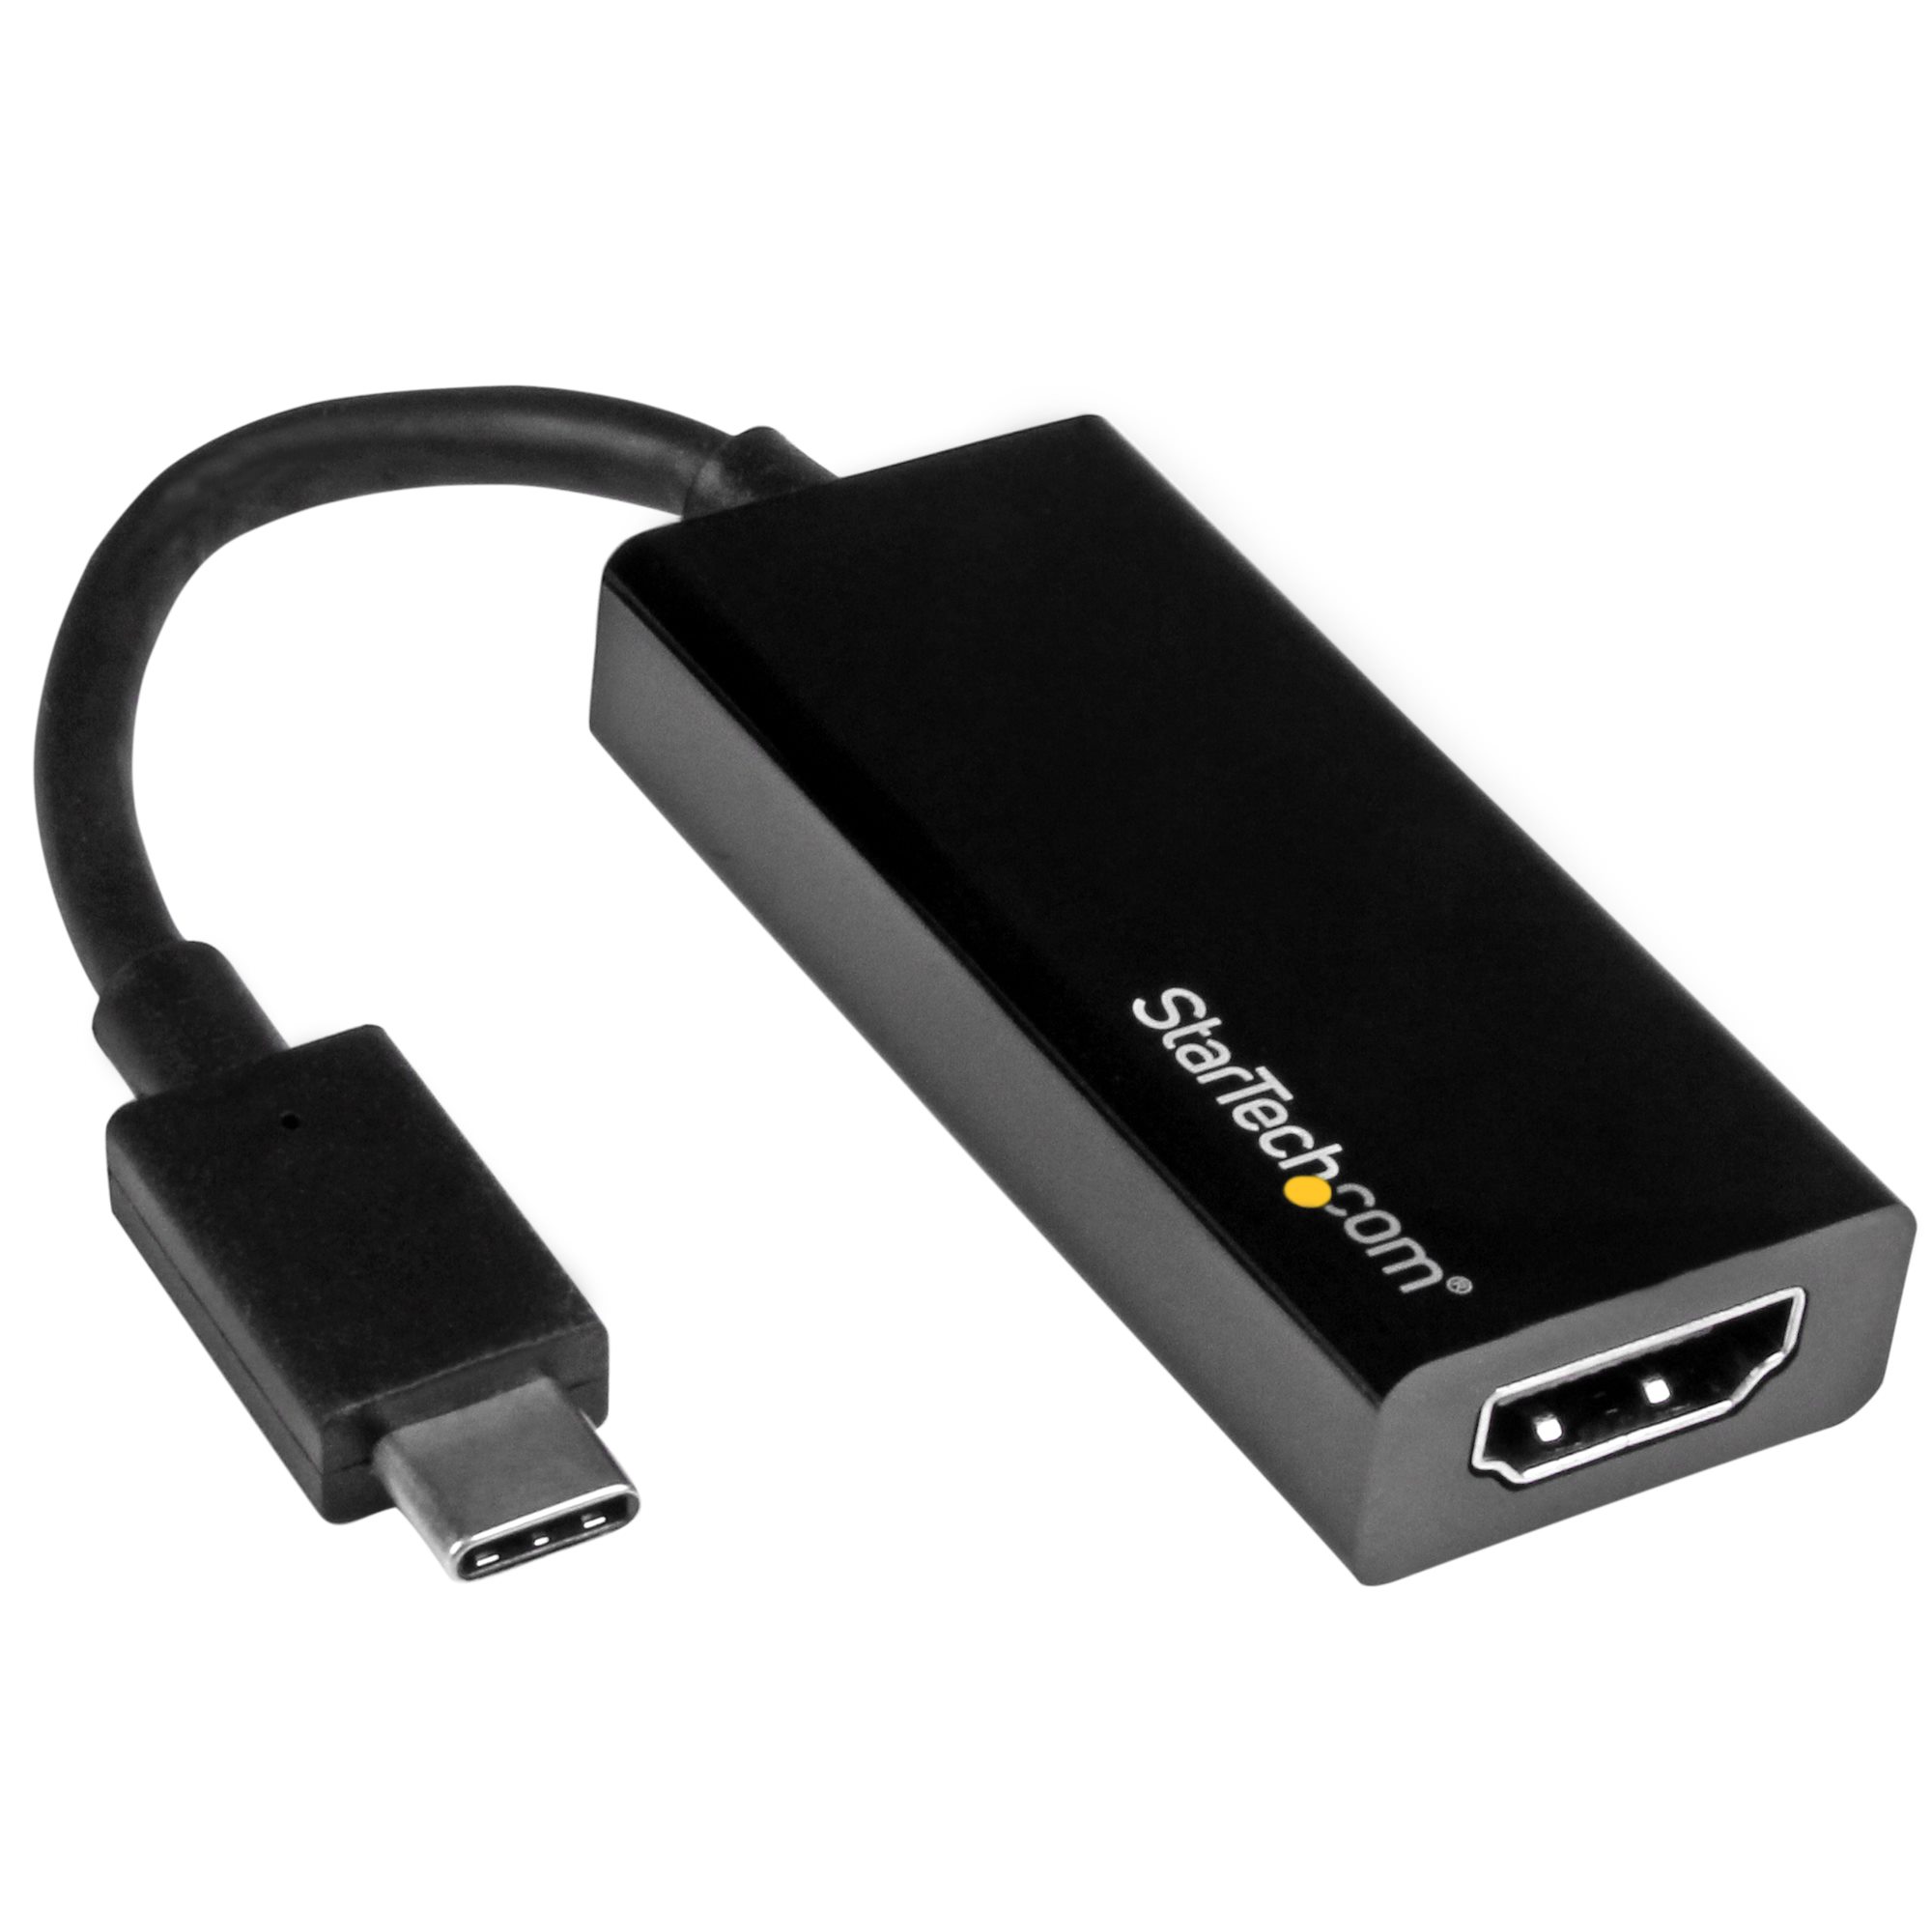 Pico Dar permiso kiwi Adapter - USB to HDMI - Adaptadores de vídeo USB-C | StarTech.com España